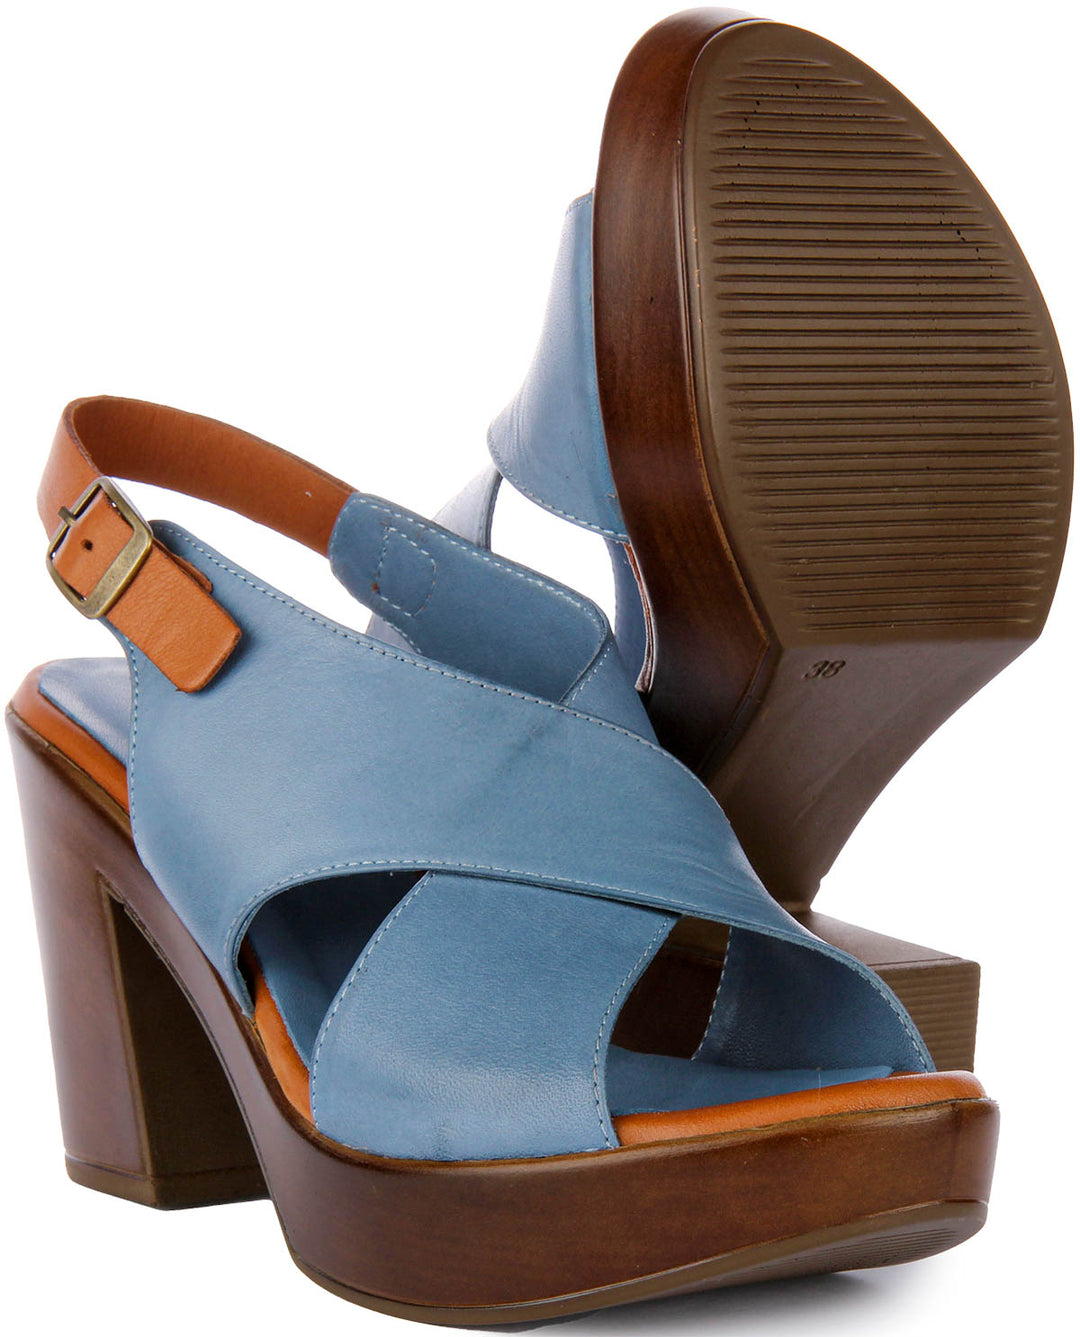 Vida Open Toe Sandals In Blue Leather